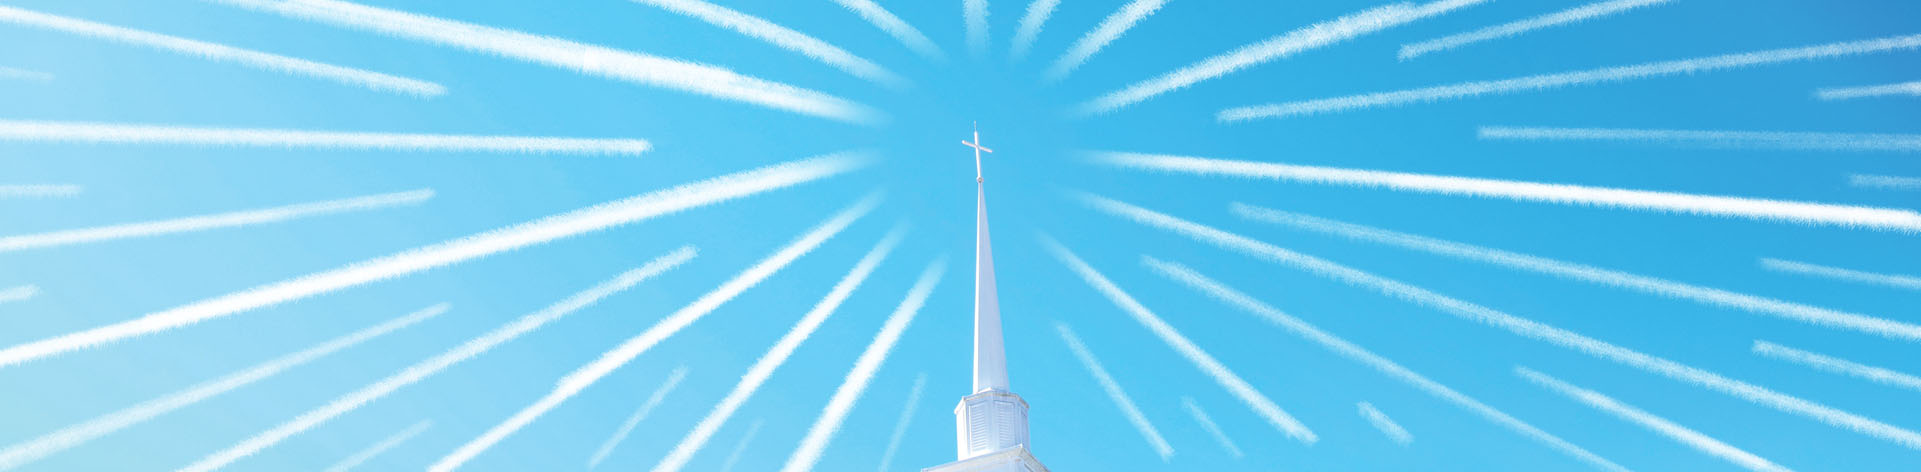 Top of church steeple in blue sky